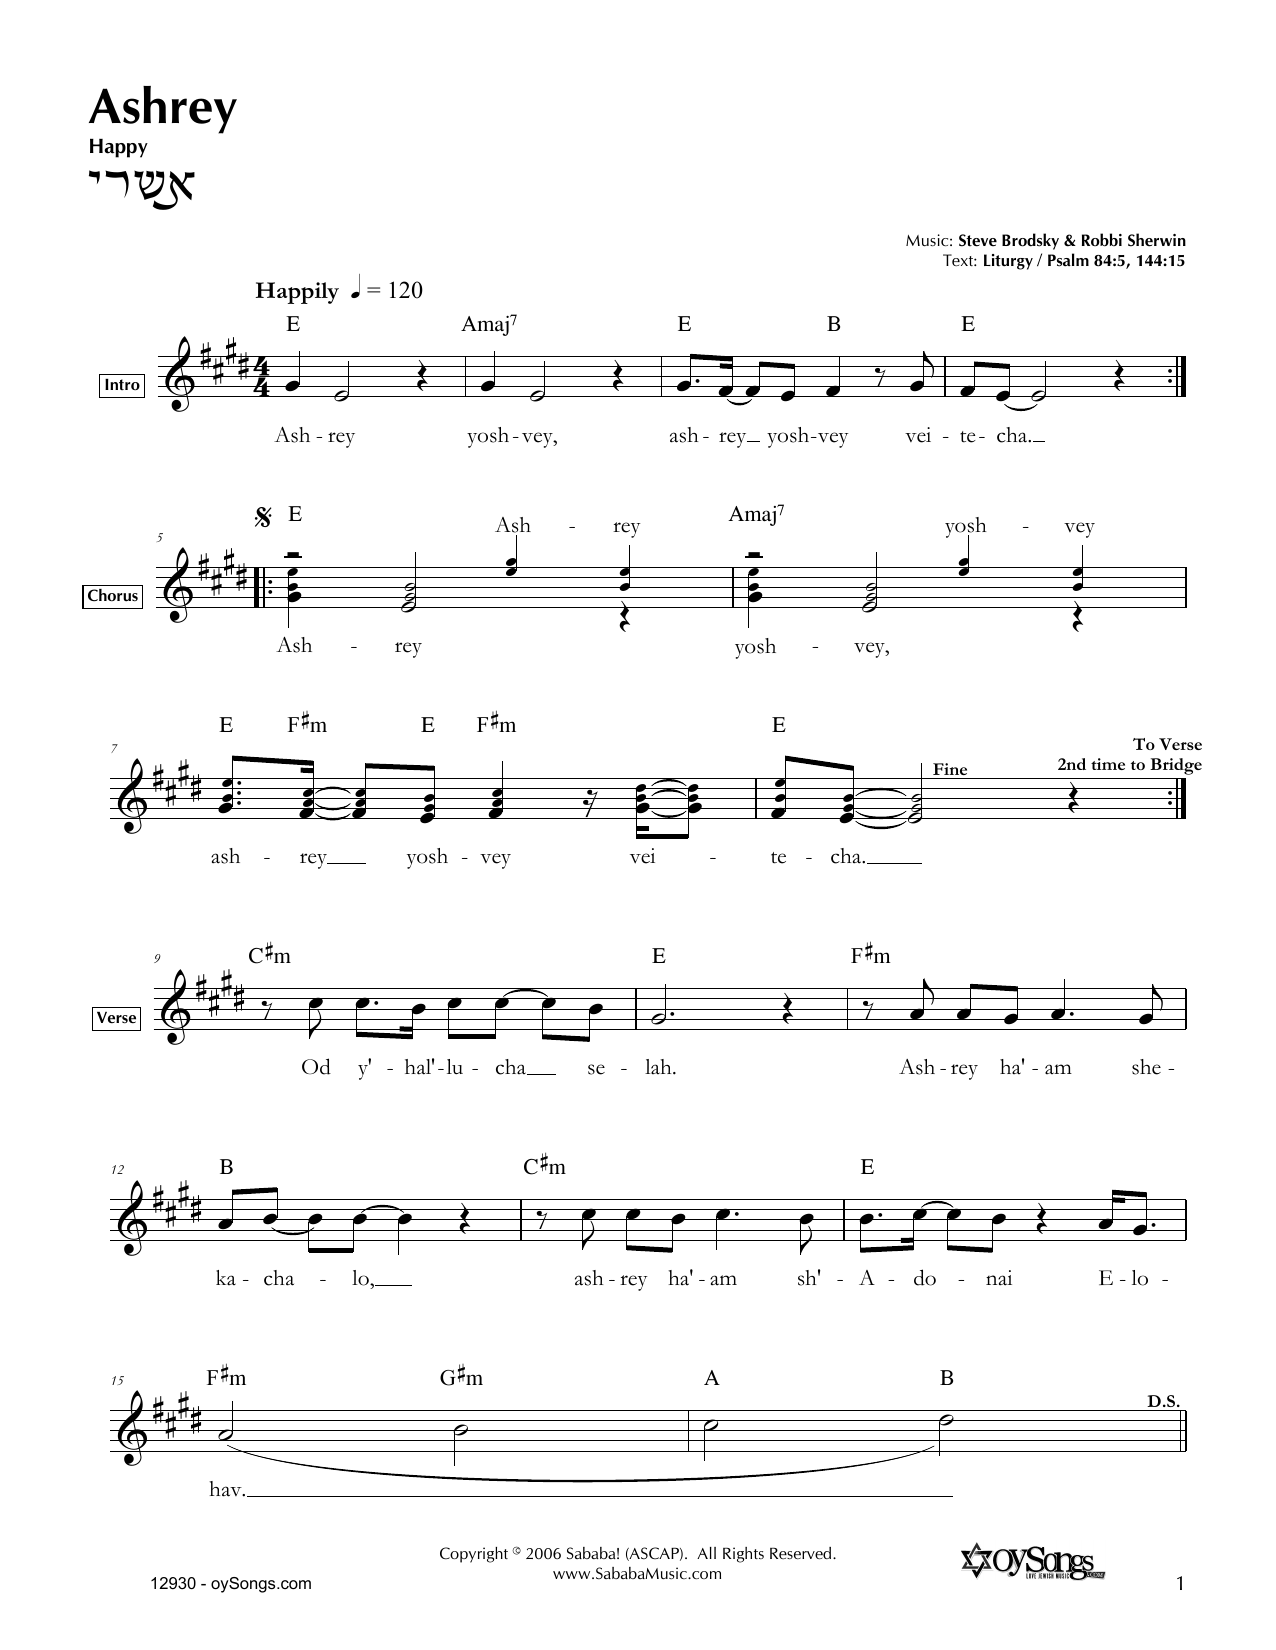 Steve Brodsky Ashrey sheet music notes and chords arranged for Lead Sheet / Fake Book